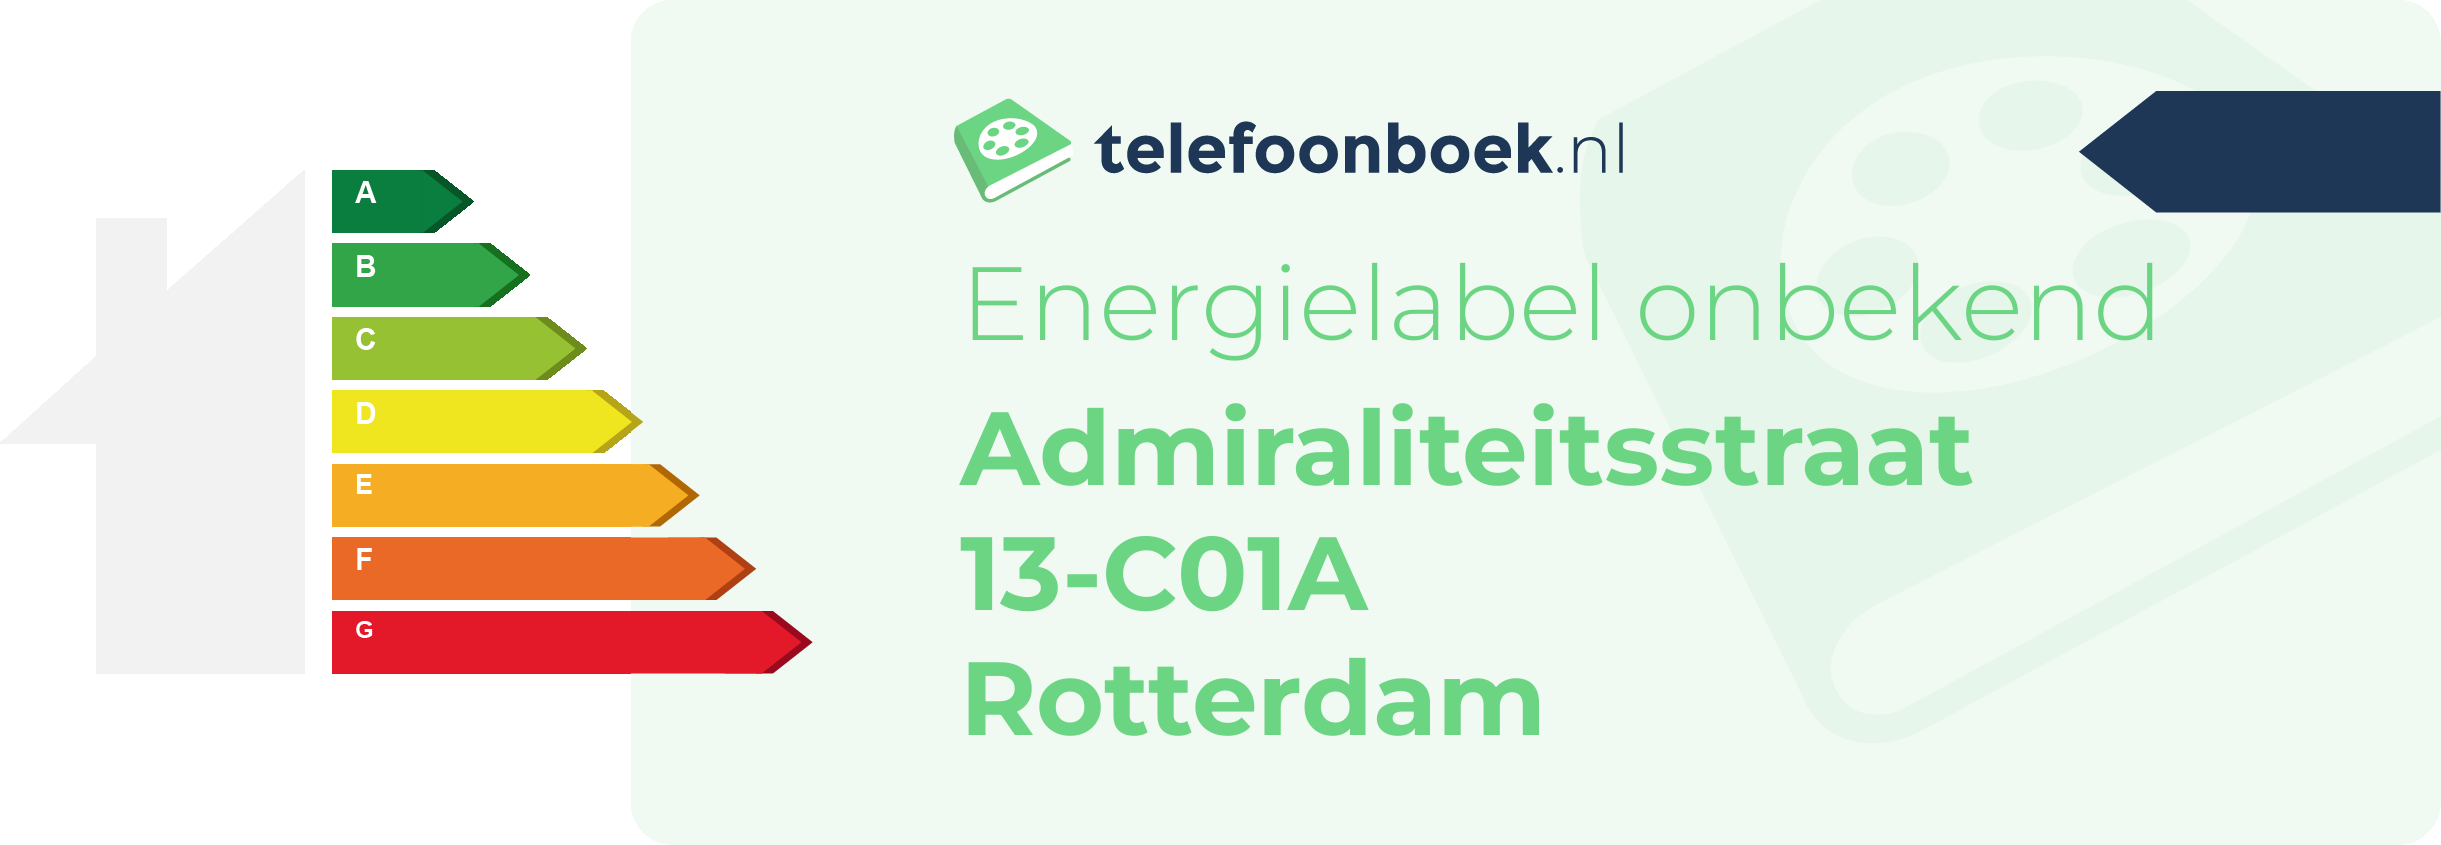 Energielabel Admiraliteitsstraat 13-C01A Rotterdam